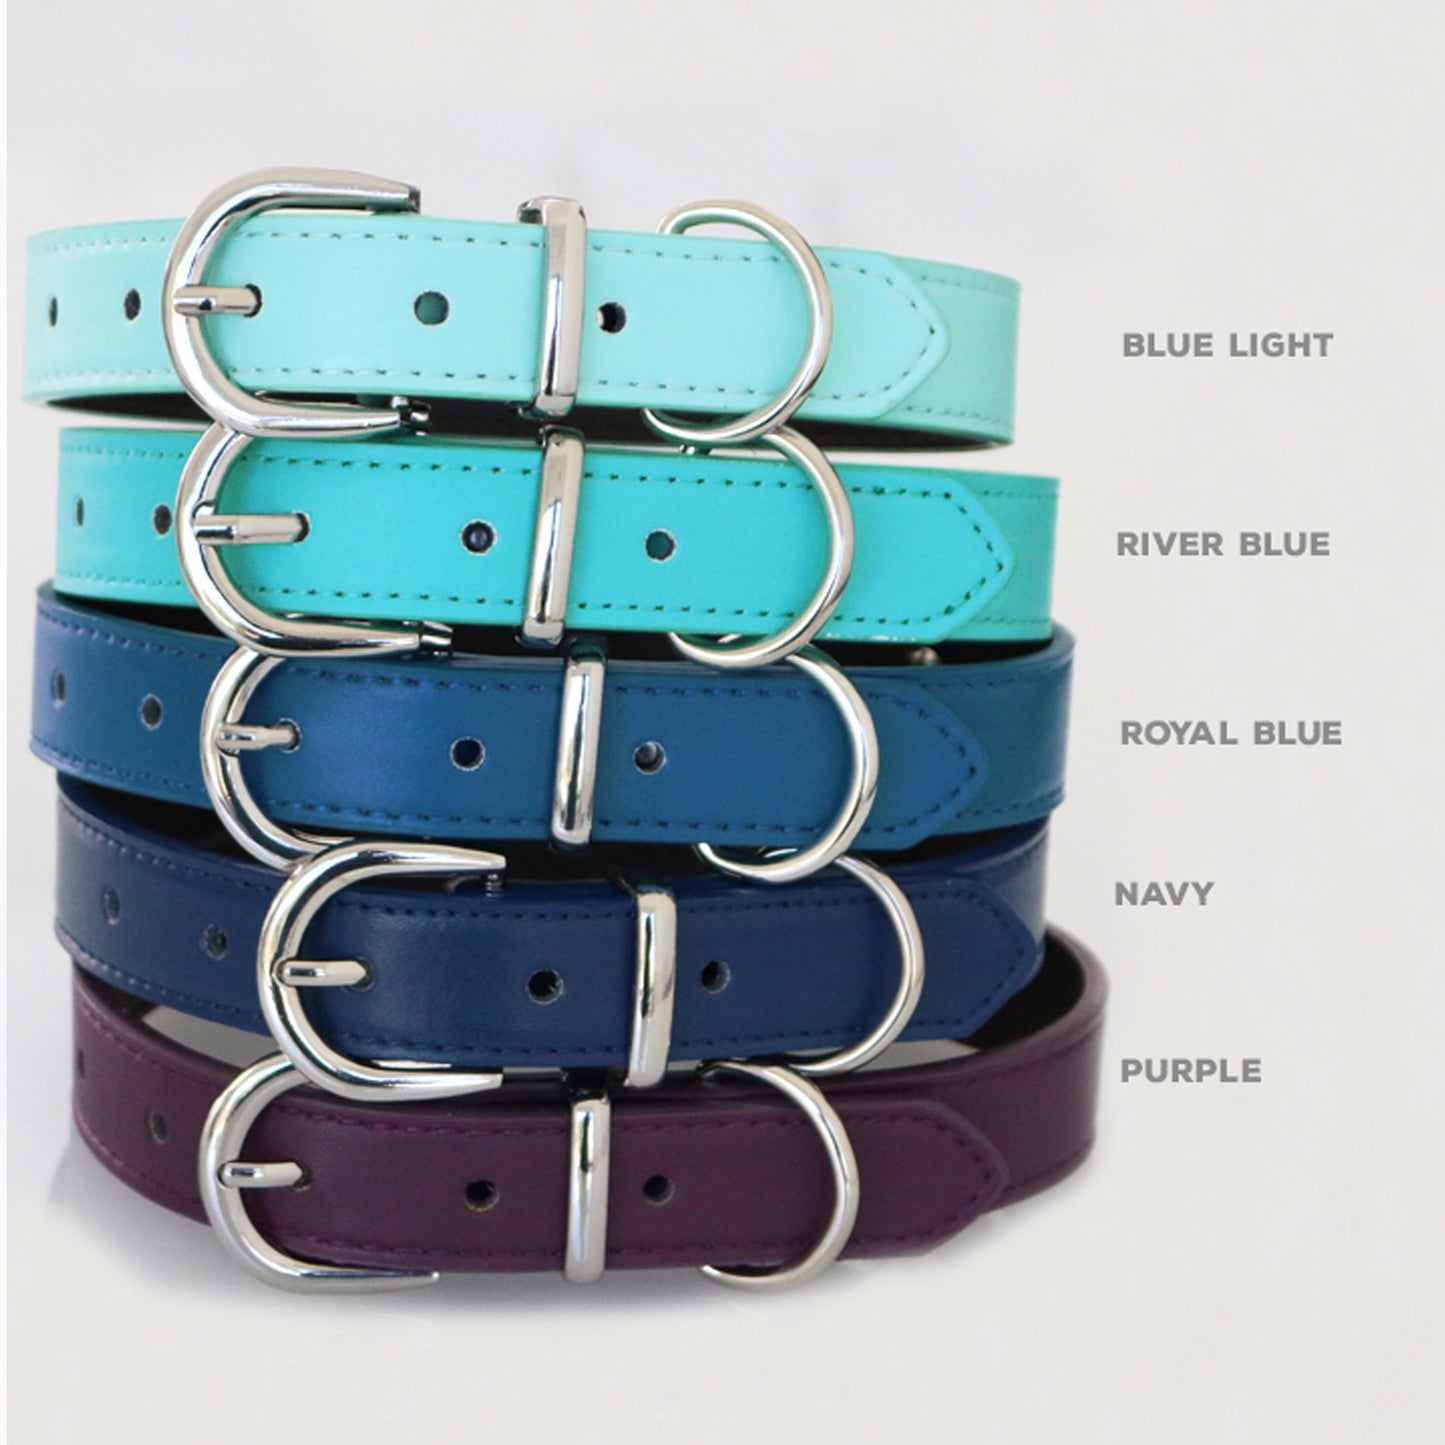 Lilac bow tie dog collar, Lilac leather dog collar, Lace bow tie, heart Key charm, Girl dog collar , Wedding dog collar